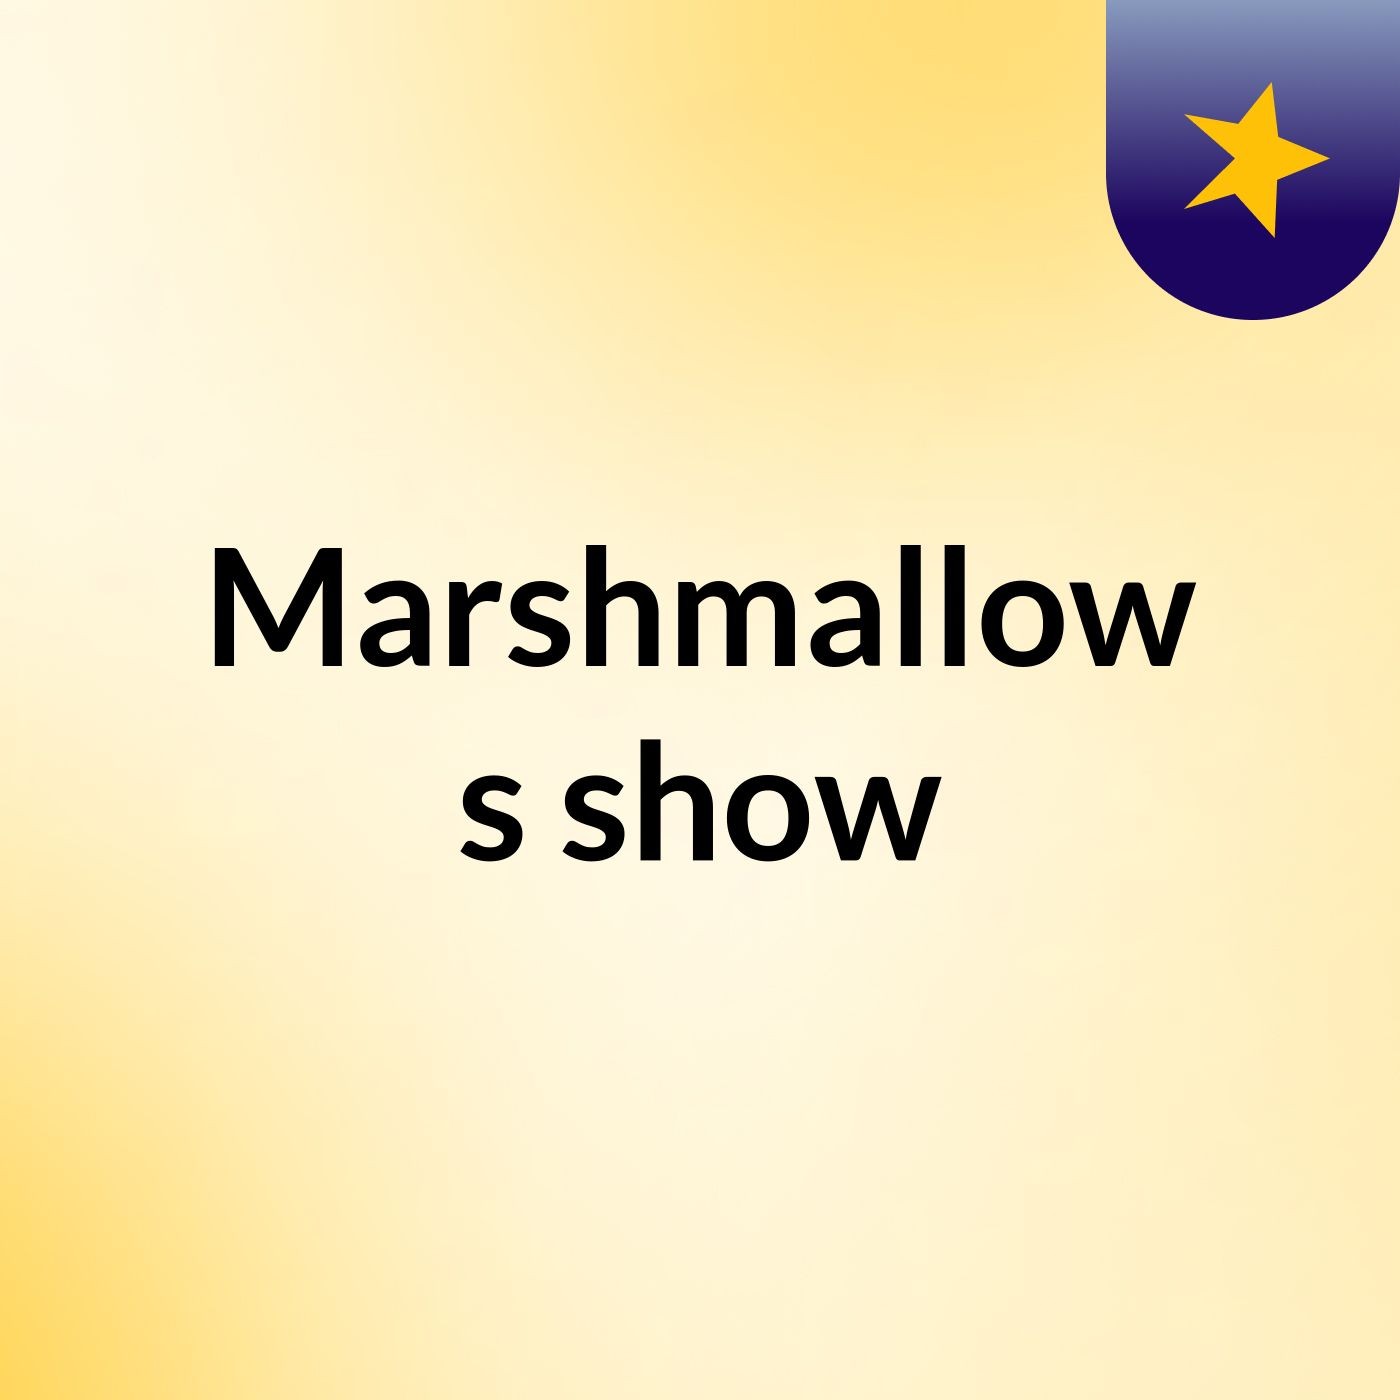 Marshmallow's show